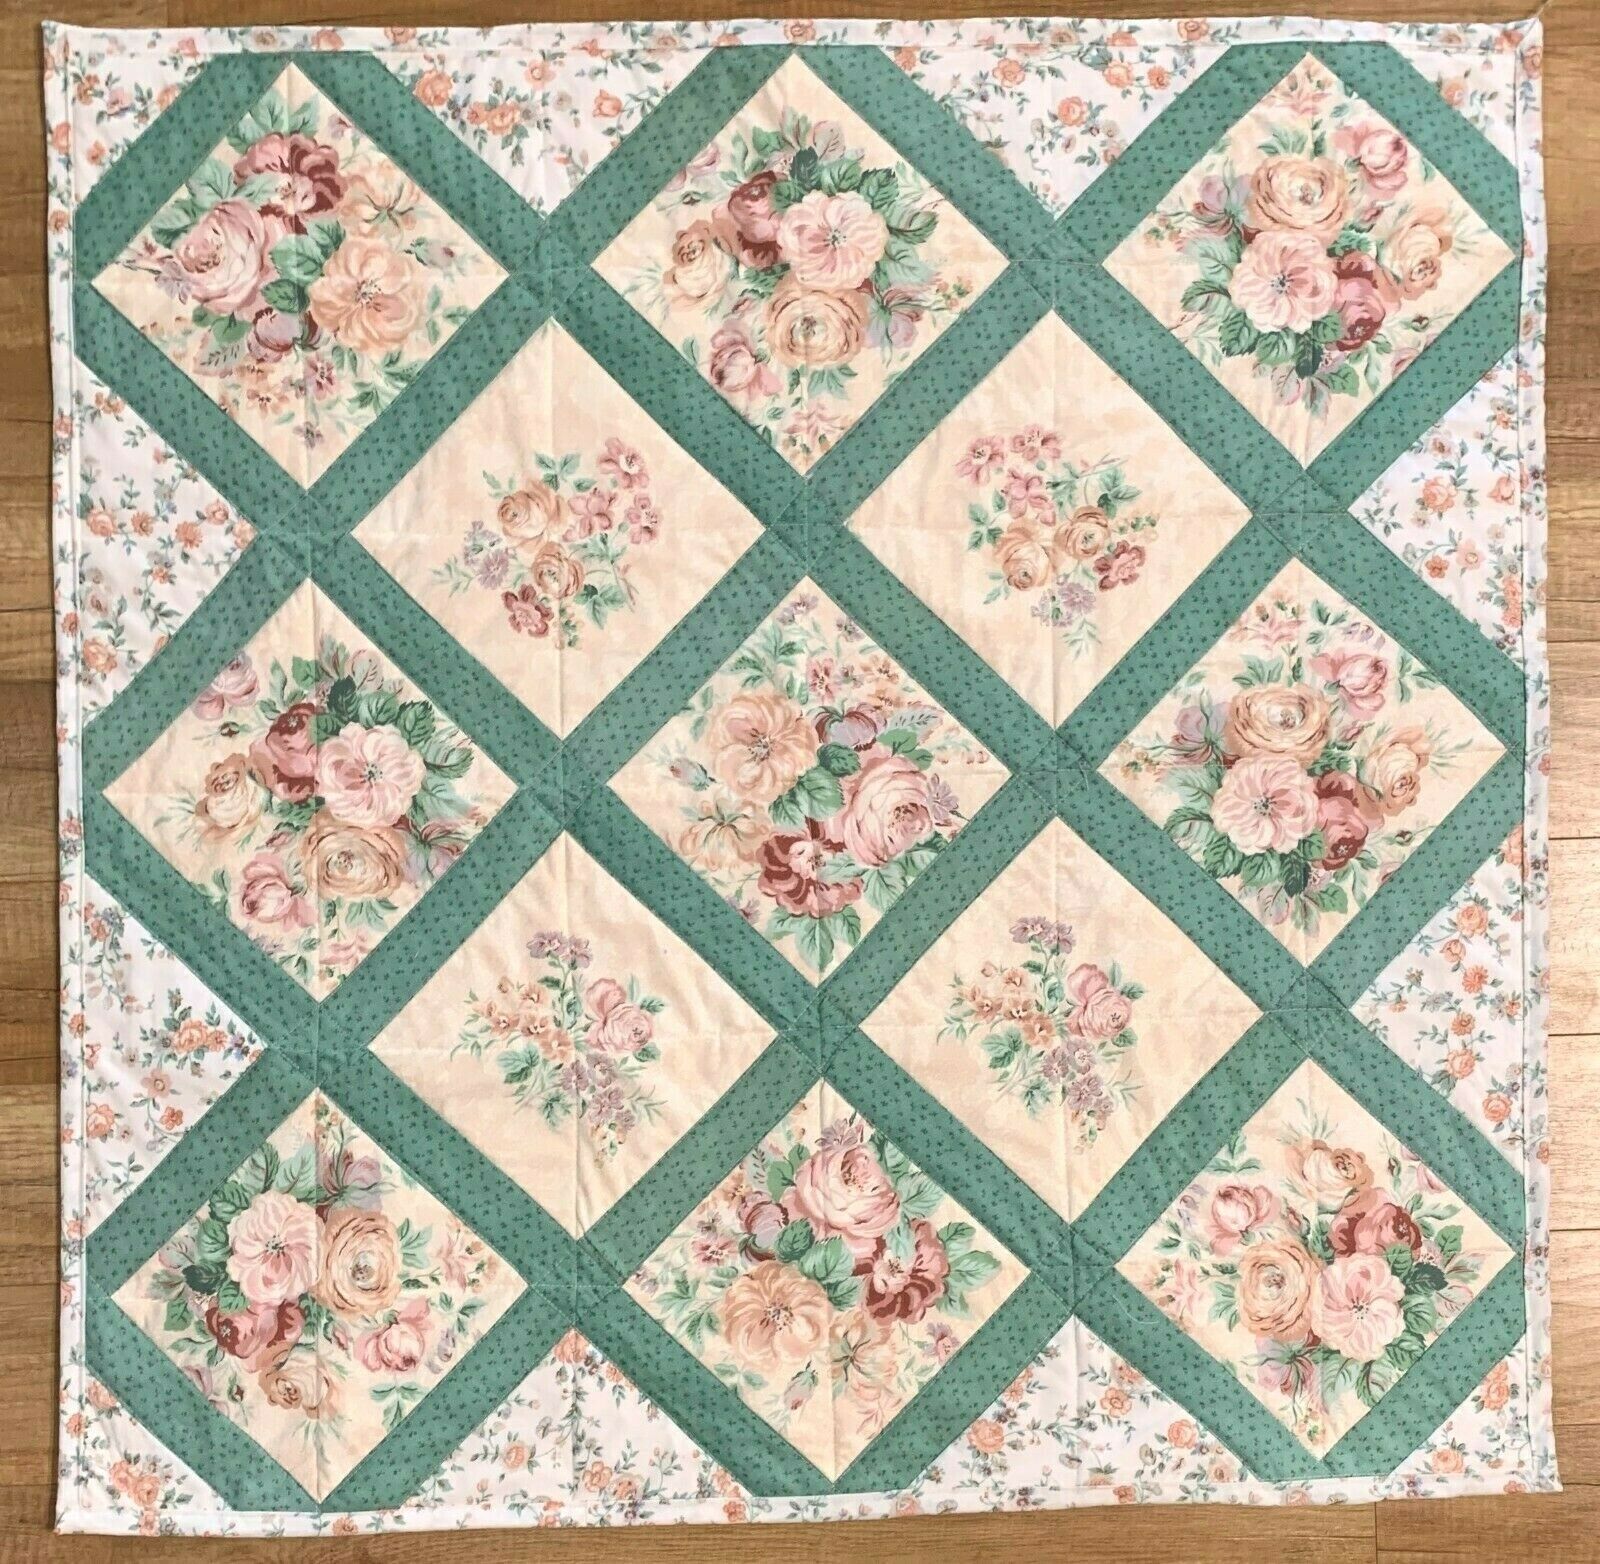 Baby Quilt Handmade Girl's Peach Green Floral Patchwork Crib Blanket 42"x42"